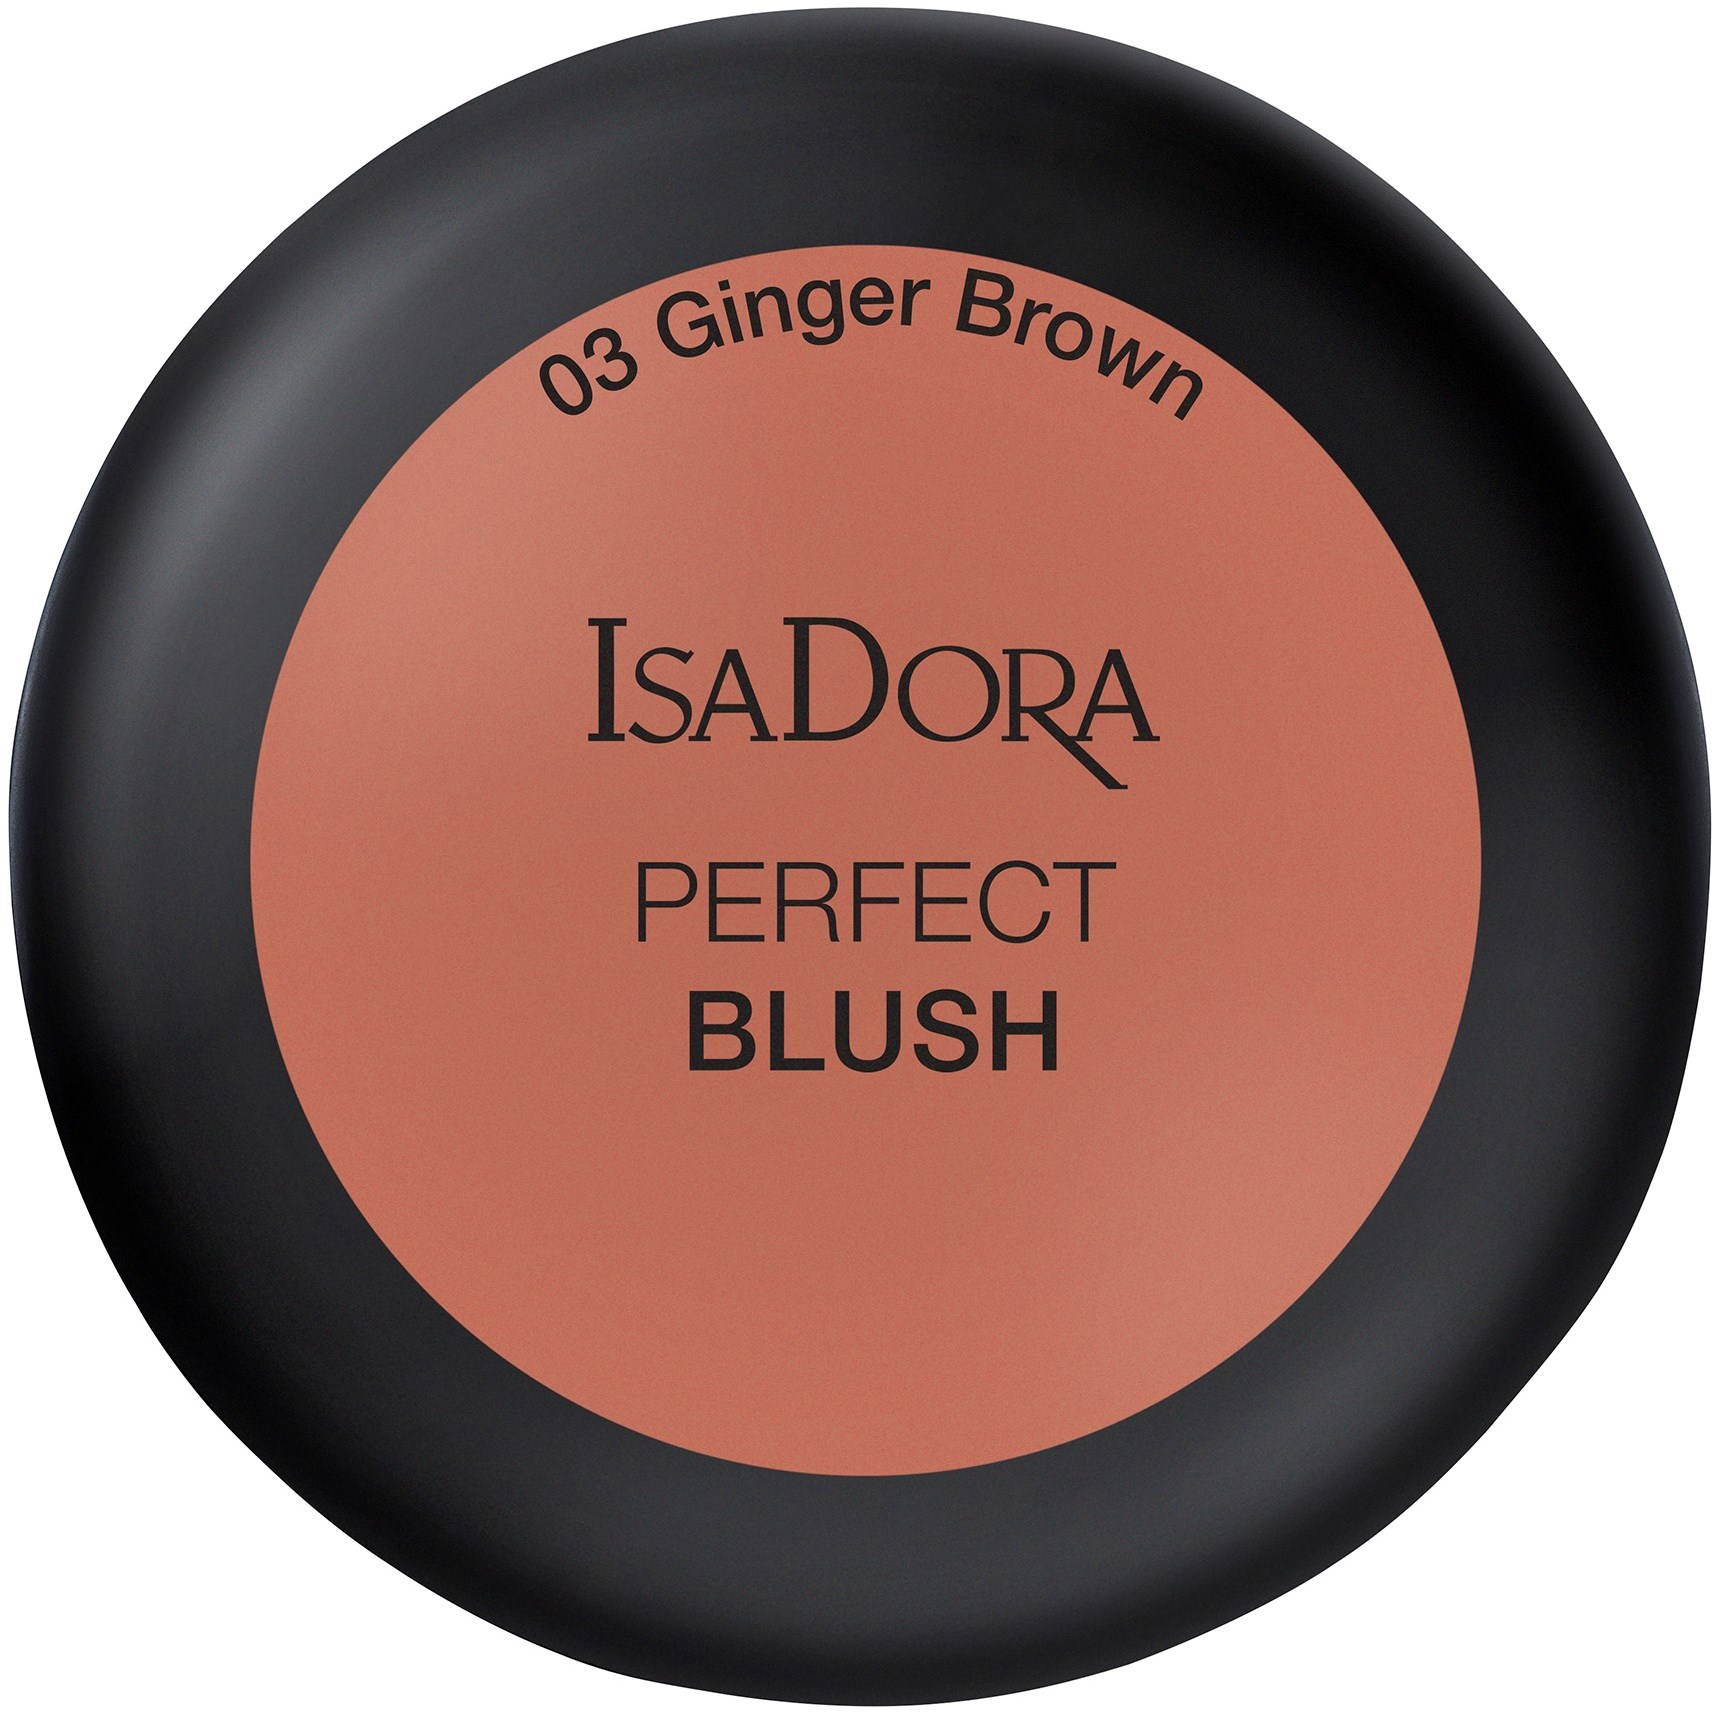 Läs mer om IsaDora Perfect Blush 3 Ginger Brown